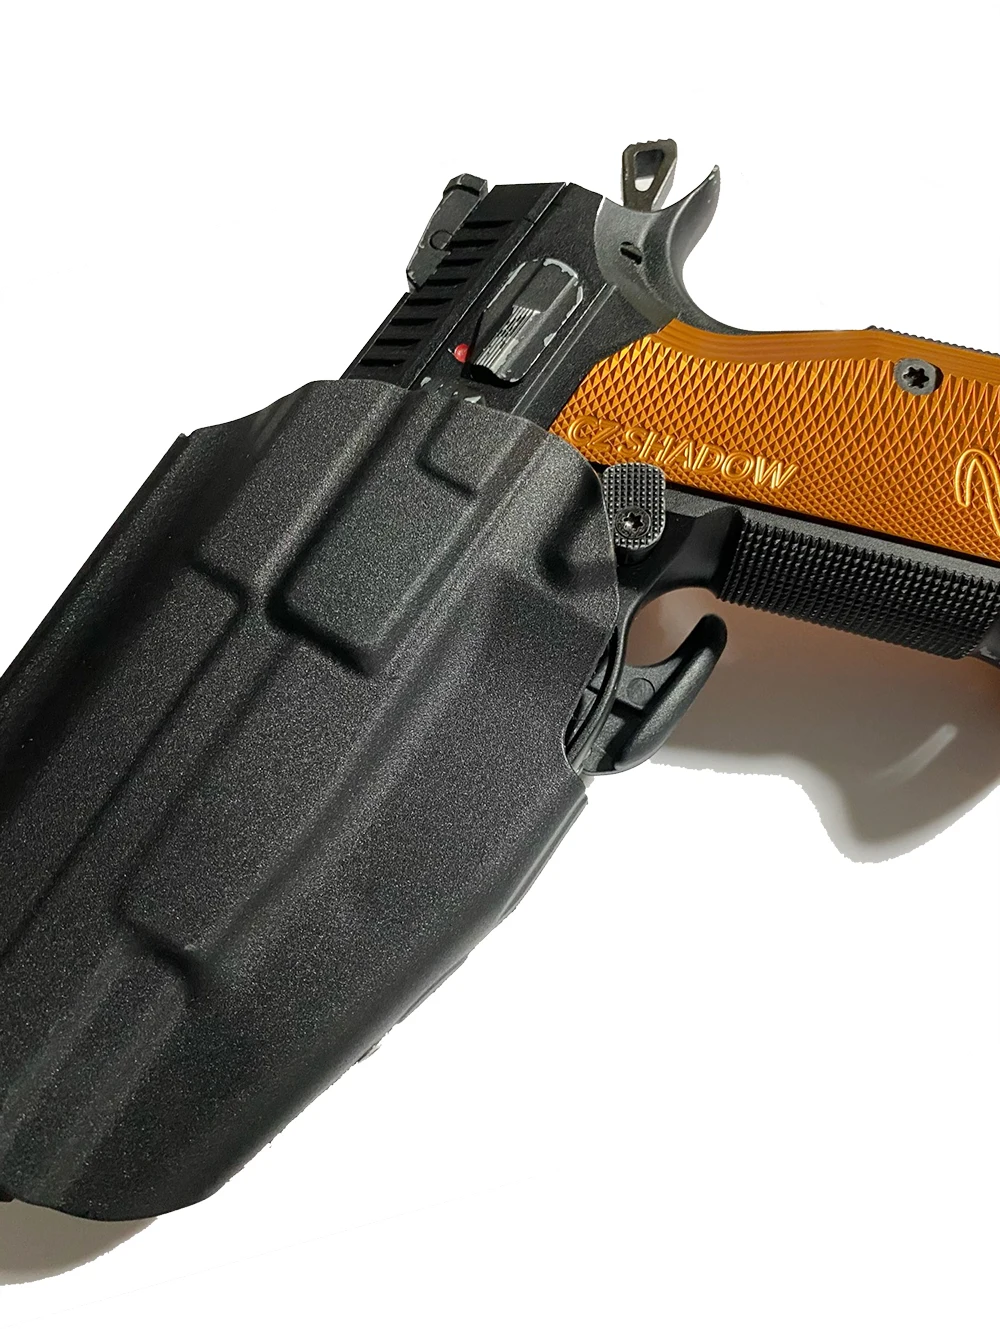 Чехол для пистолета Glock 17 19 23 P226 H & K USP S W M P 45 Taurus | Спорт и развлечения